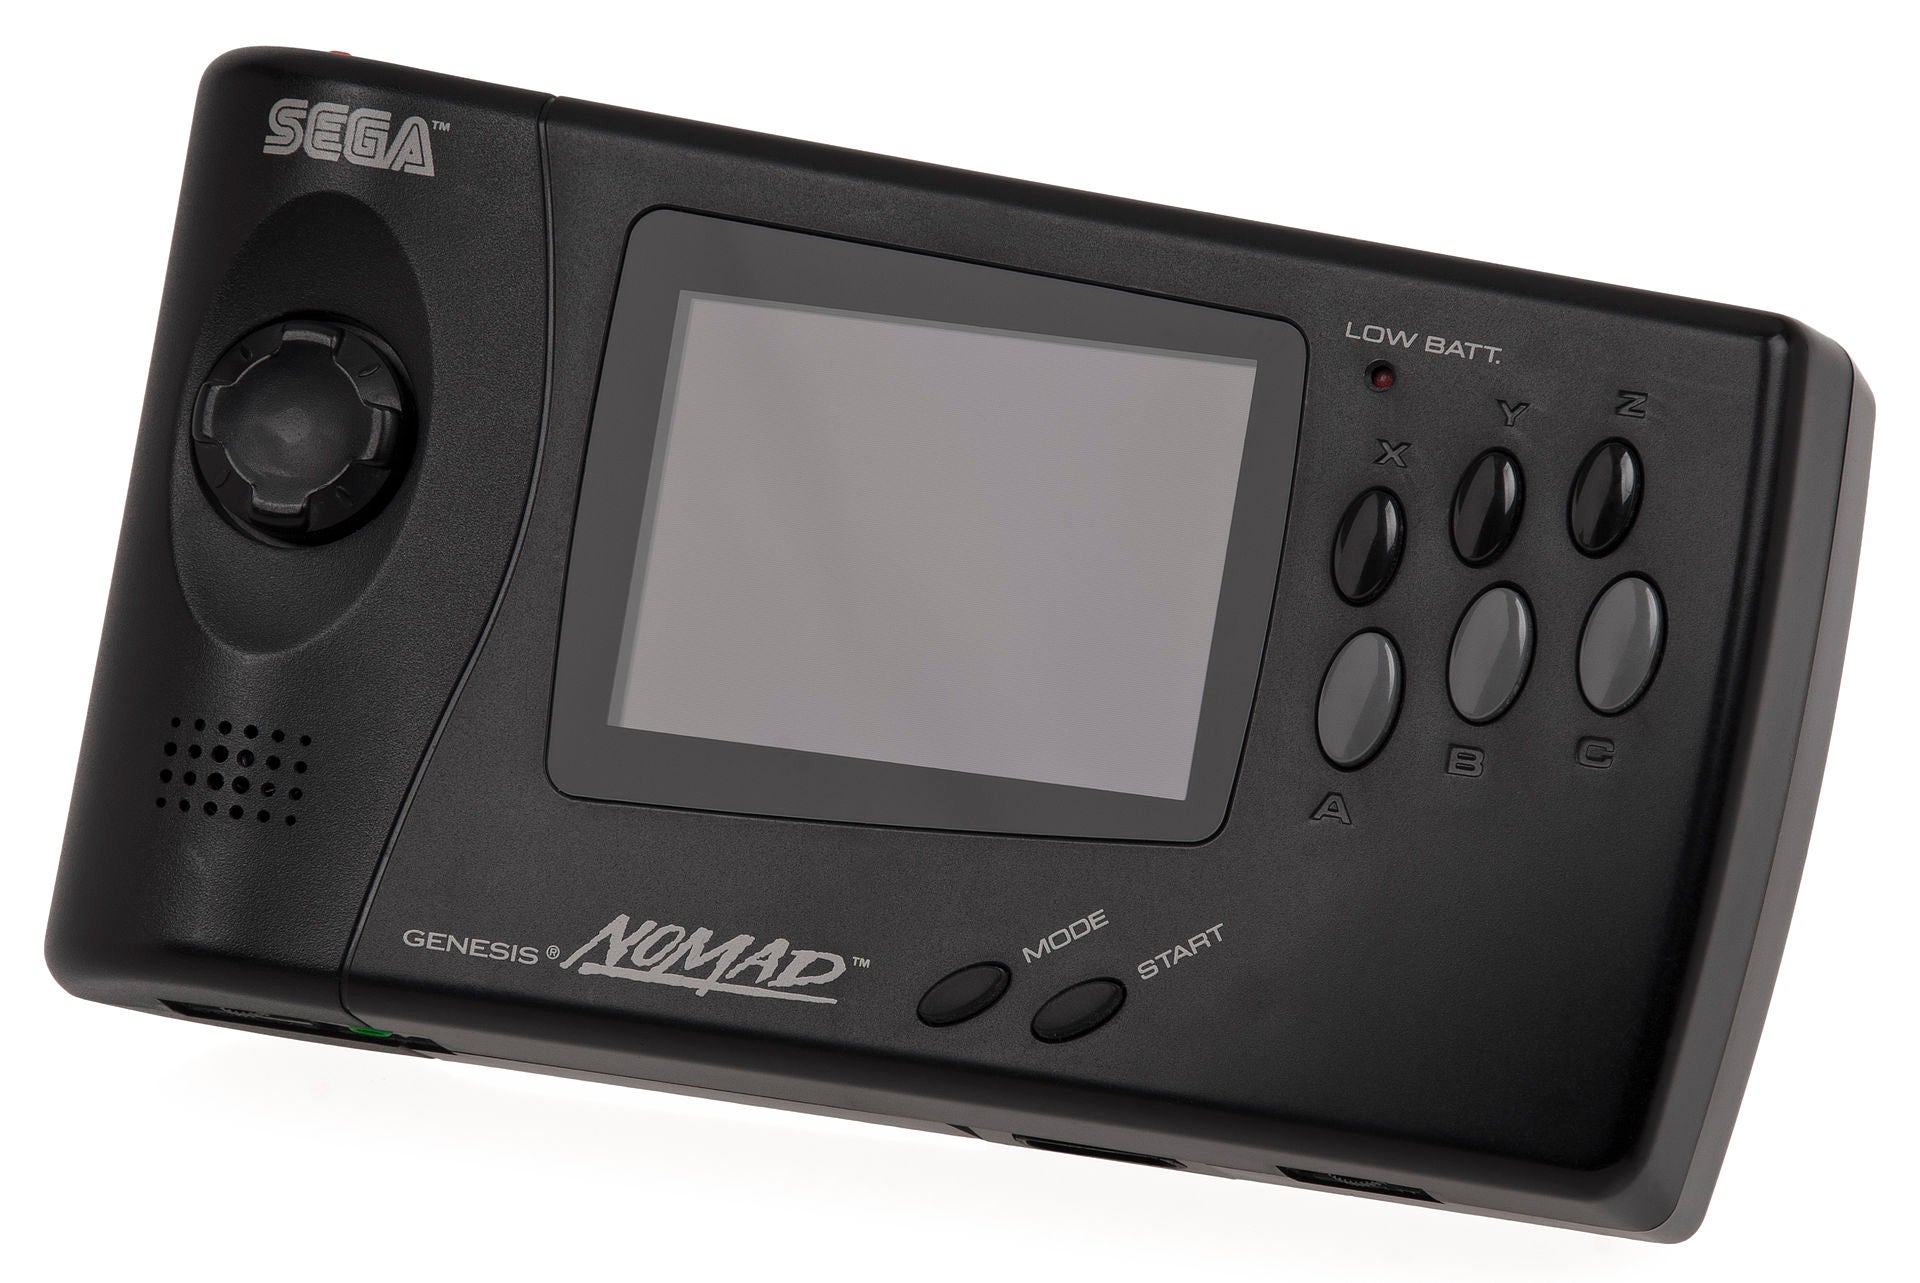 RetroPixl Retrogaming Sega Genesis Nomad